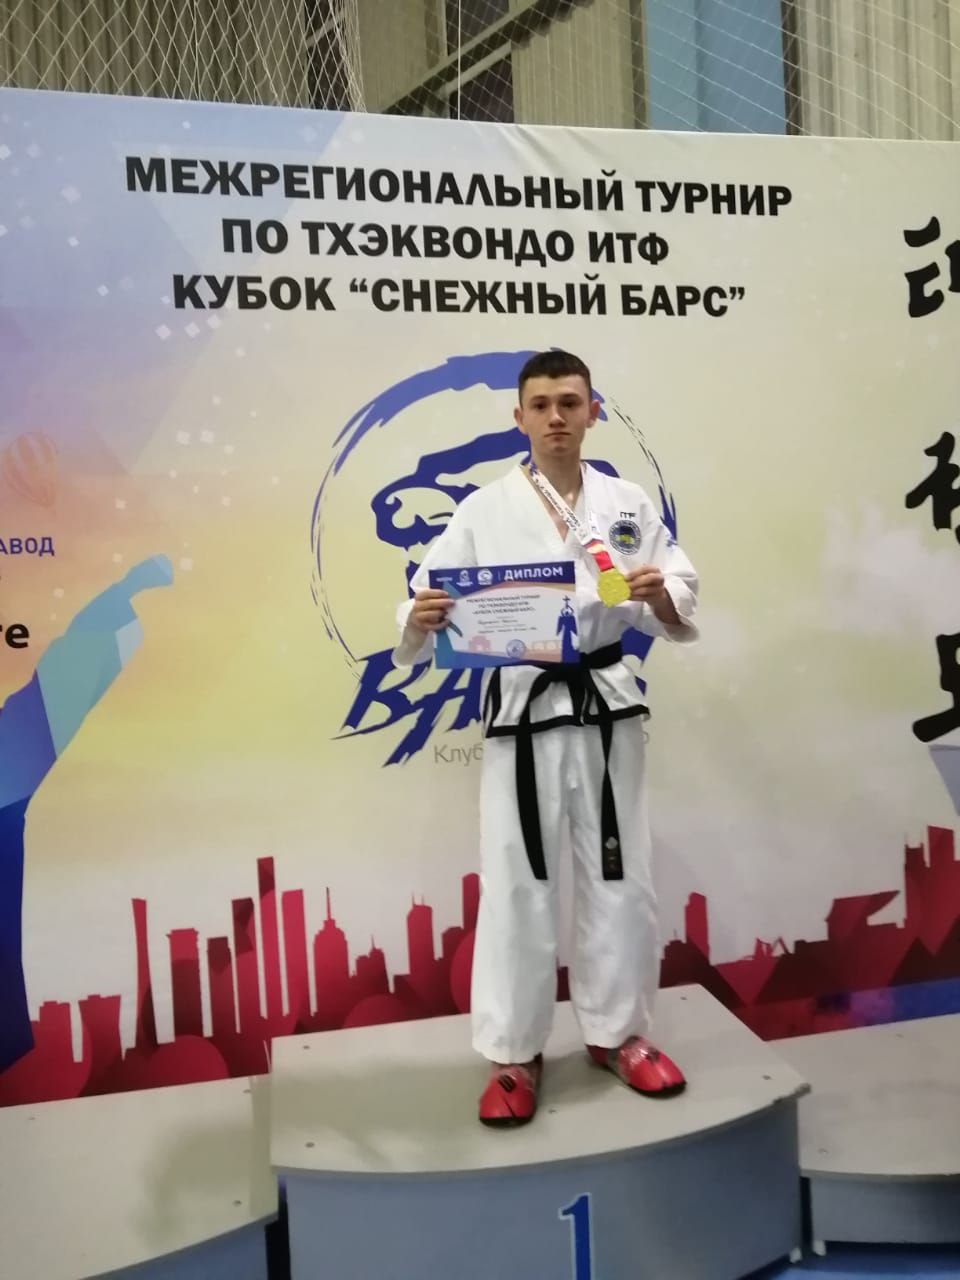 Спортсмен, обучающийся МБОУ СОШ 23 Багдасарян Никита - занял 1 место по спарингу. 2 место в командном спаринге.